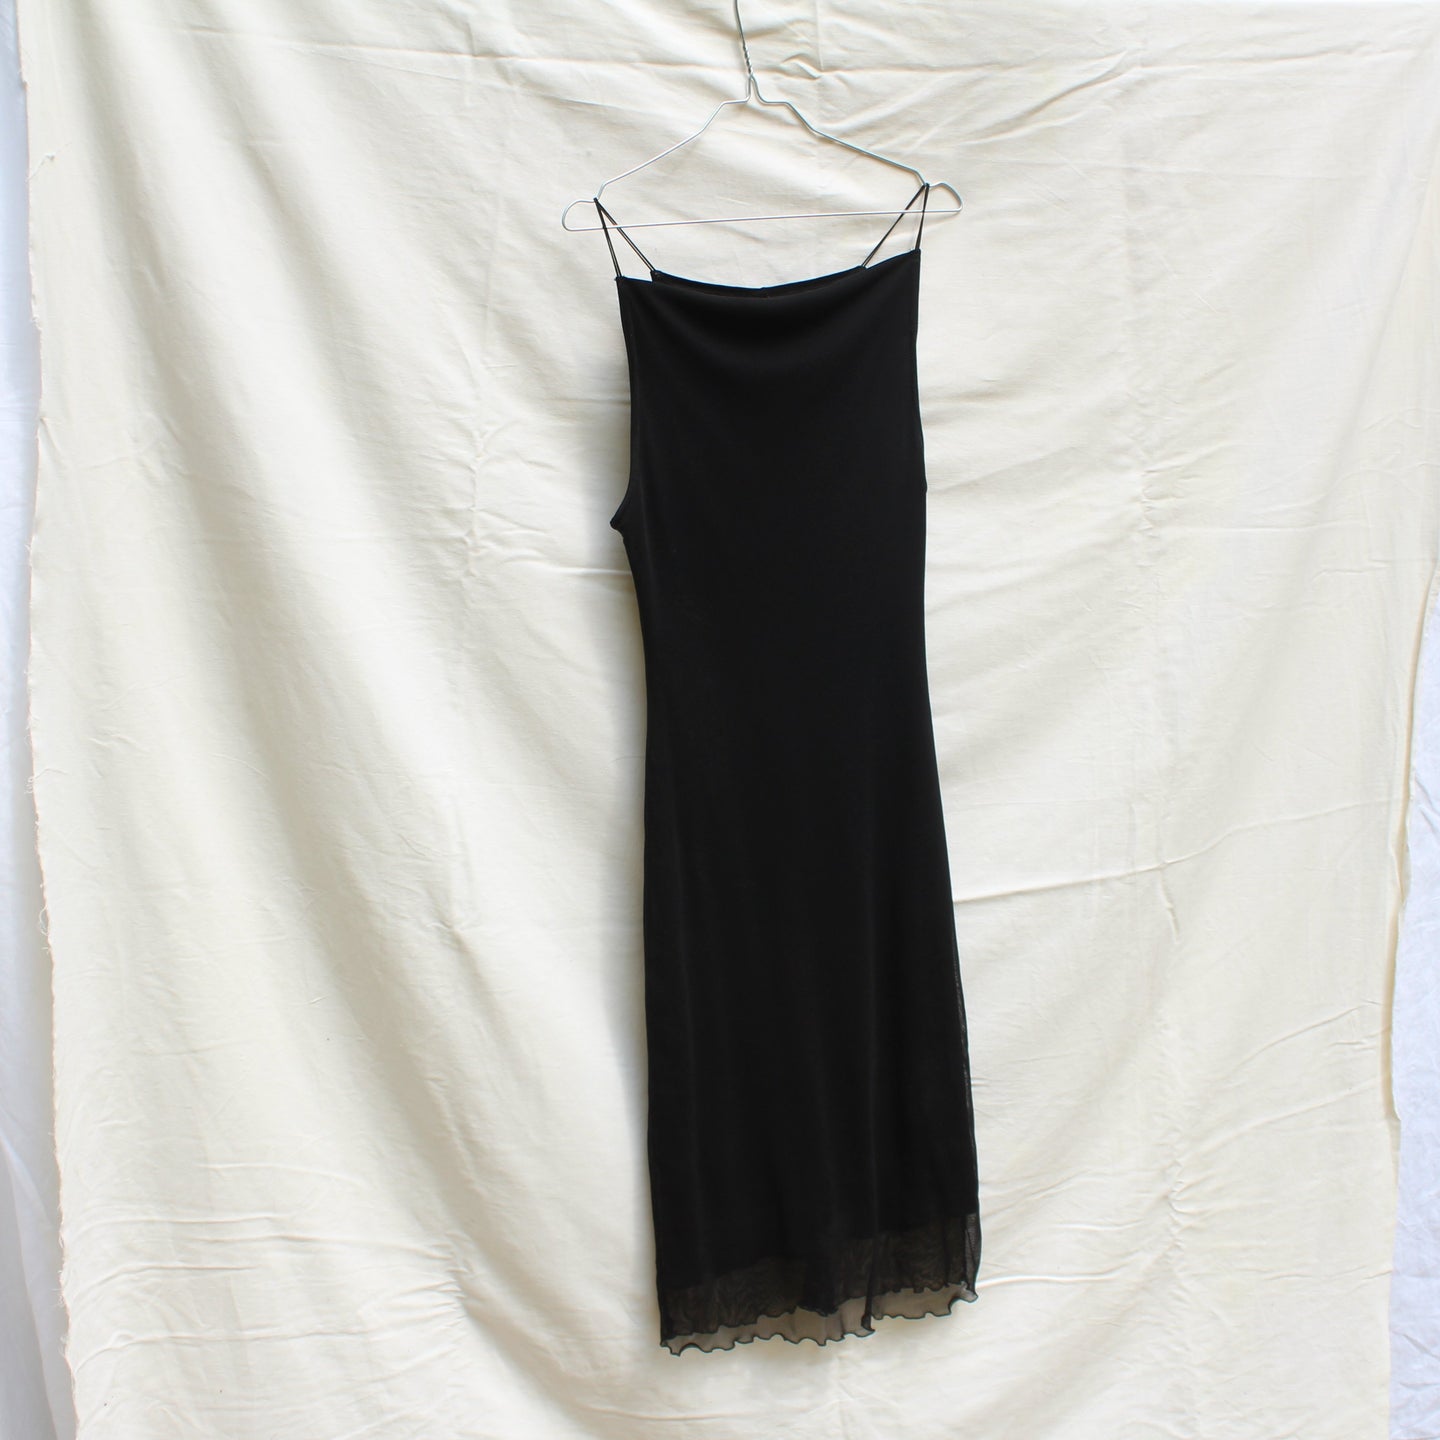 90's black midi dress with spaghetti straps, size XS/S